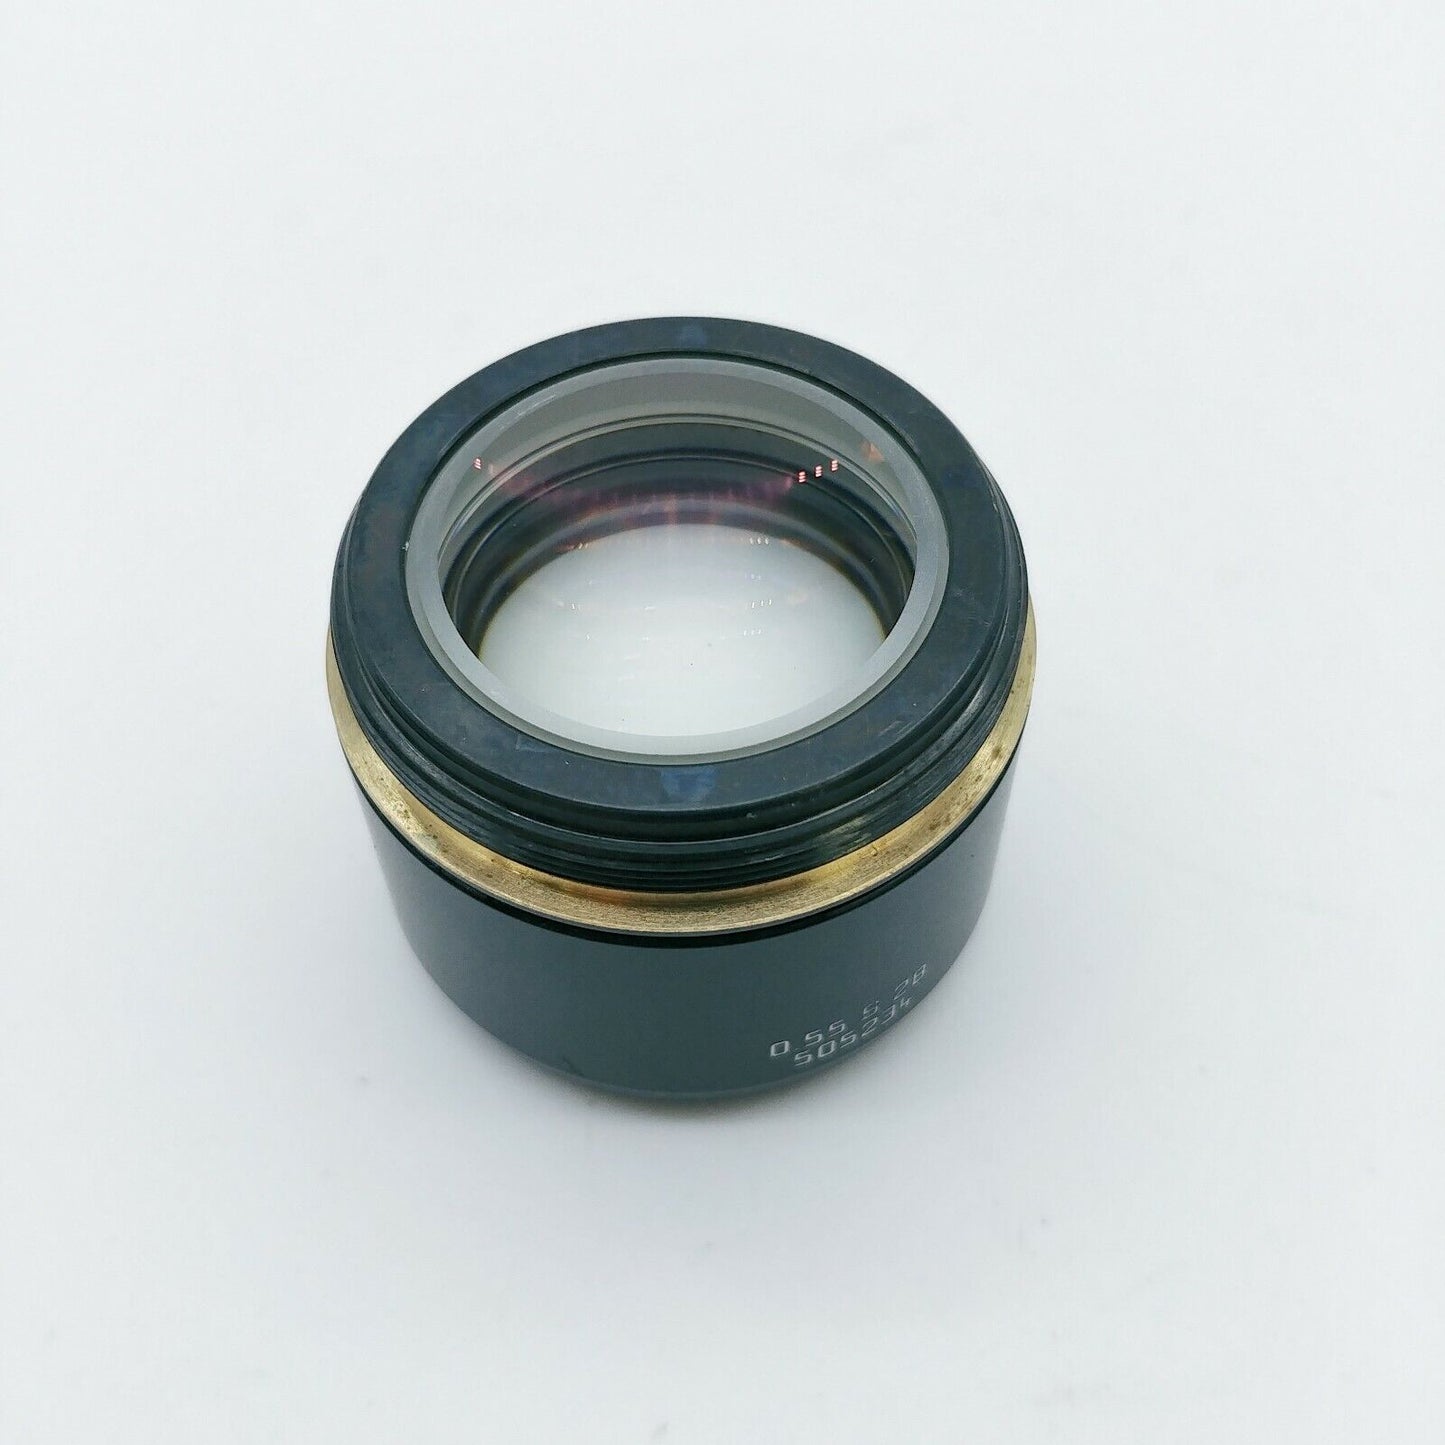 Leica Microscope Condenser Head Lens 0.55 S 28 Article No. 505234 - microscopemarketplace